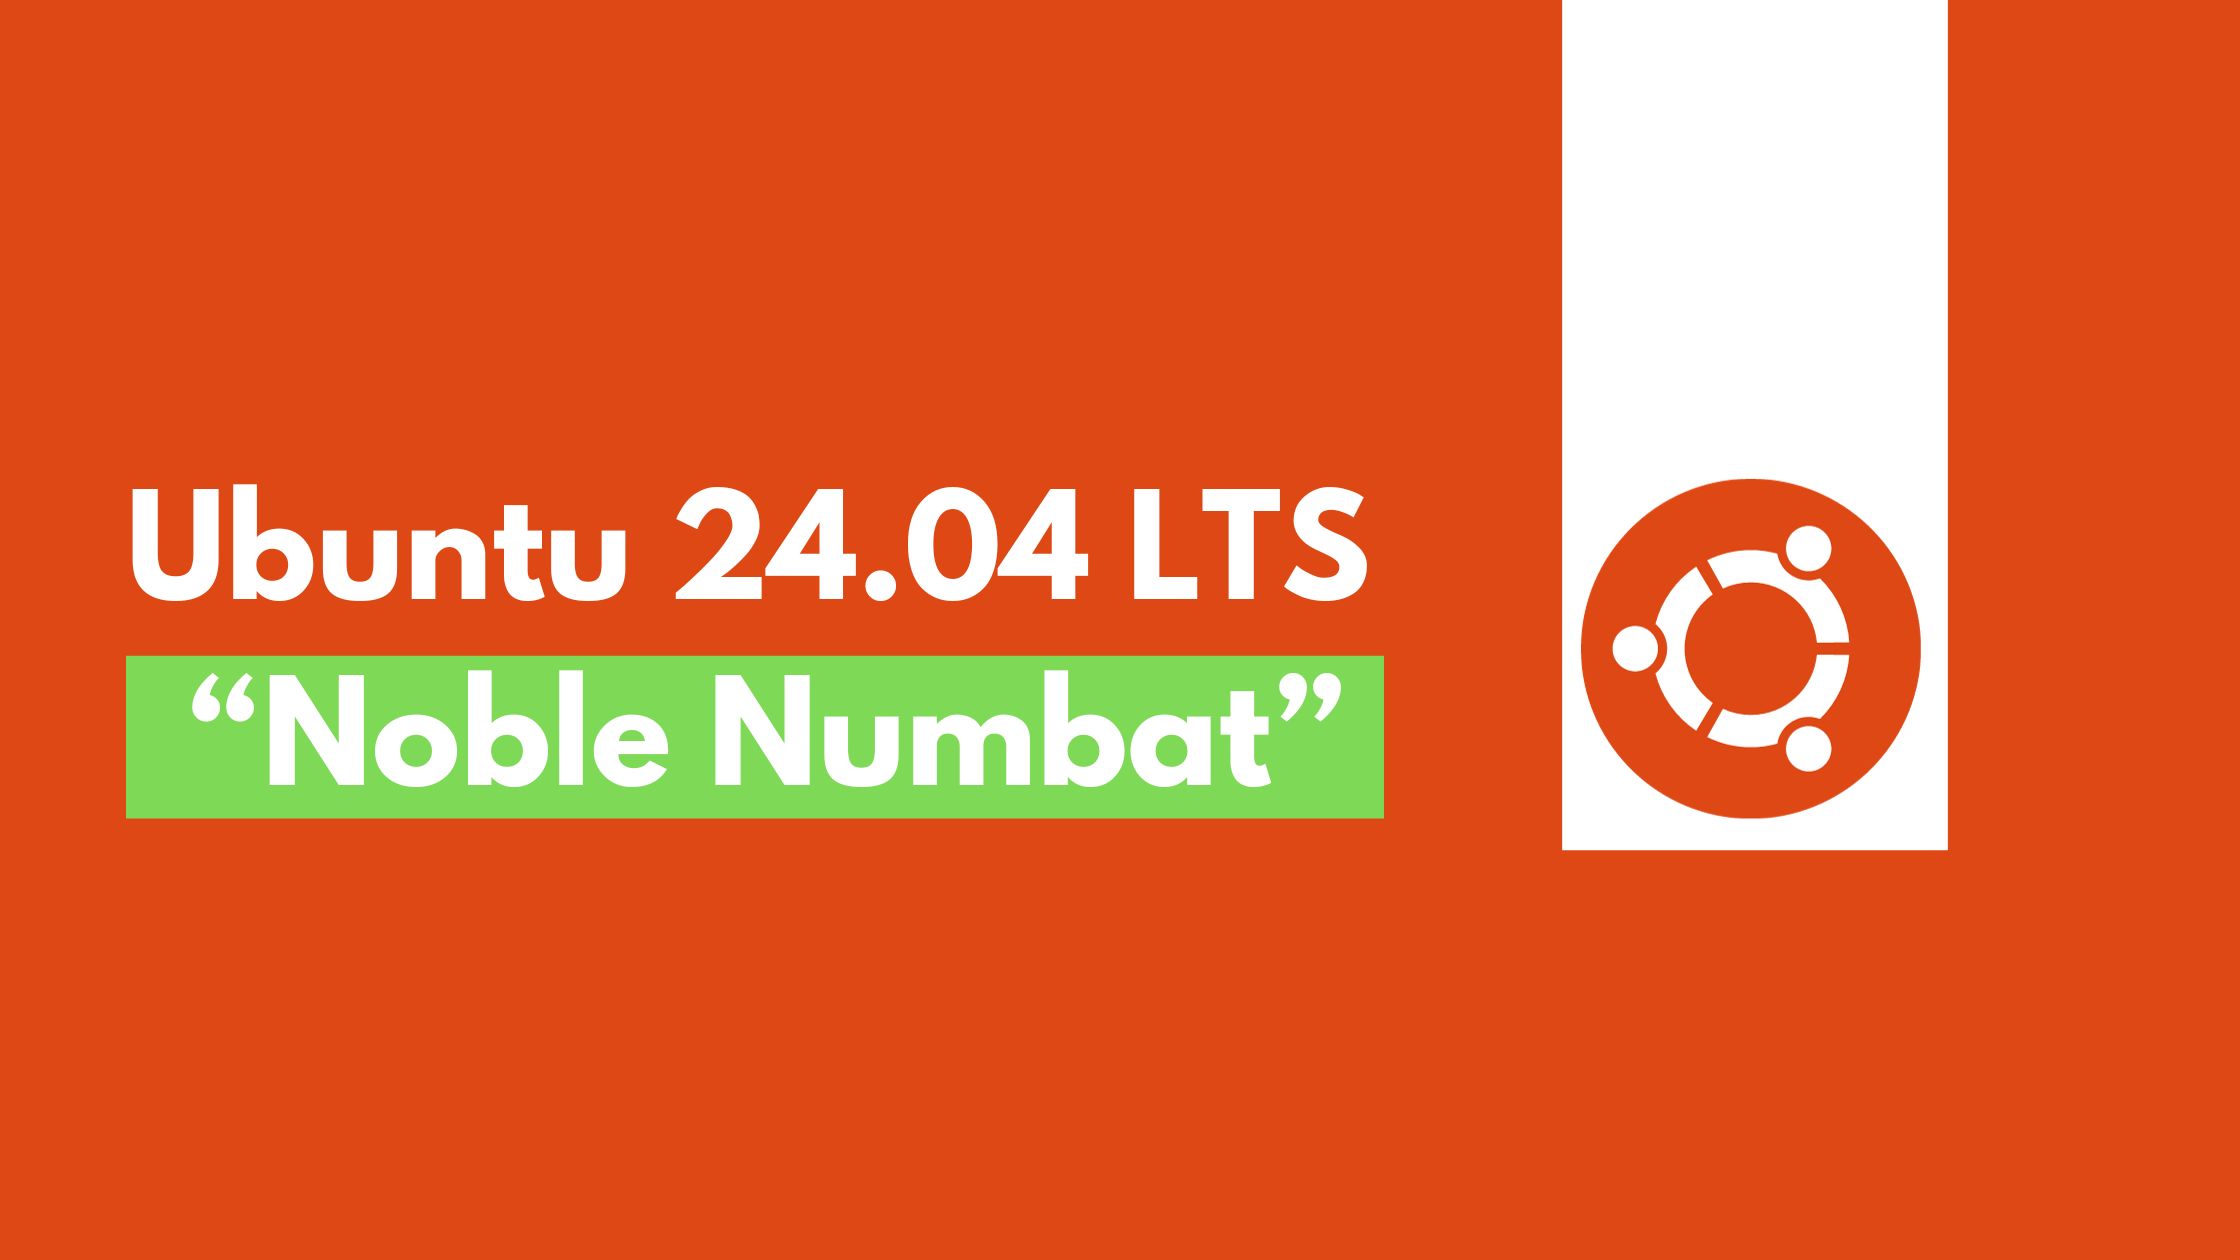 Ubuntu 24.04 LTS “Noble Numbat”